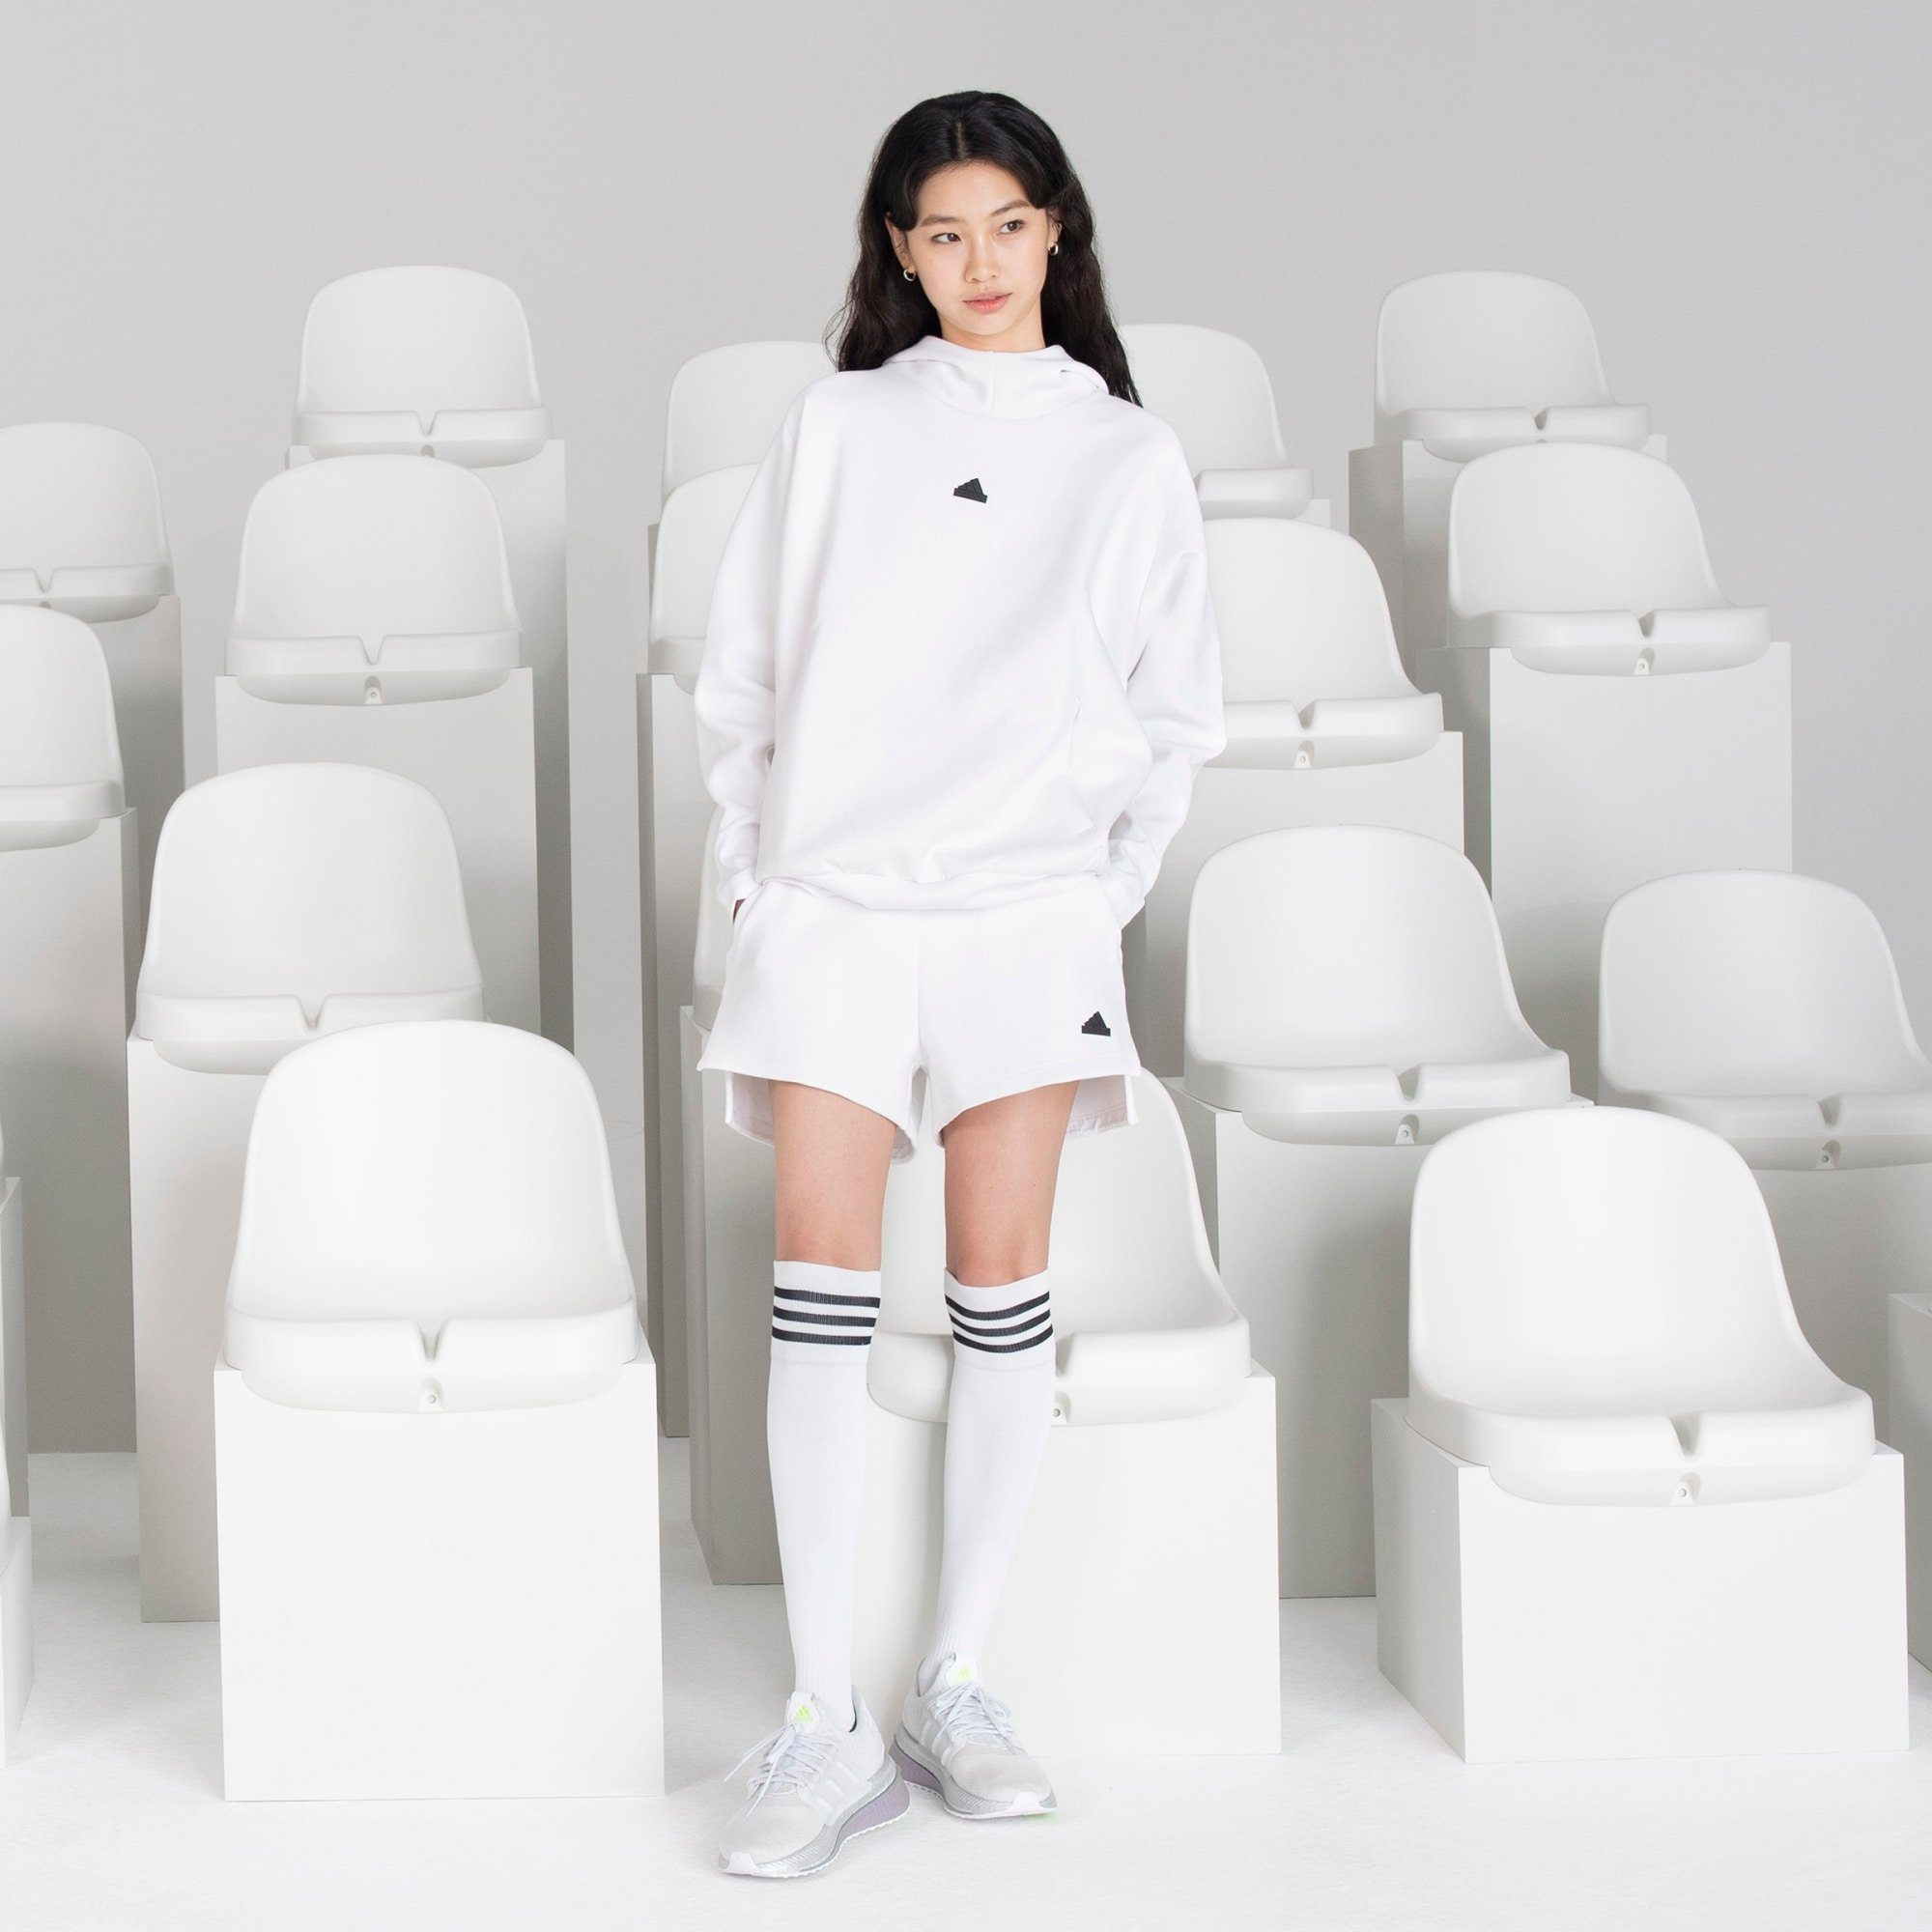 Z.N.E. SHORTS Shorts Sportswear White adidas